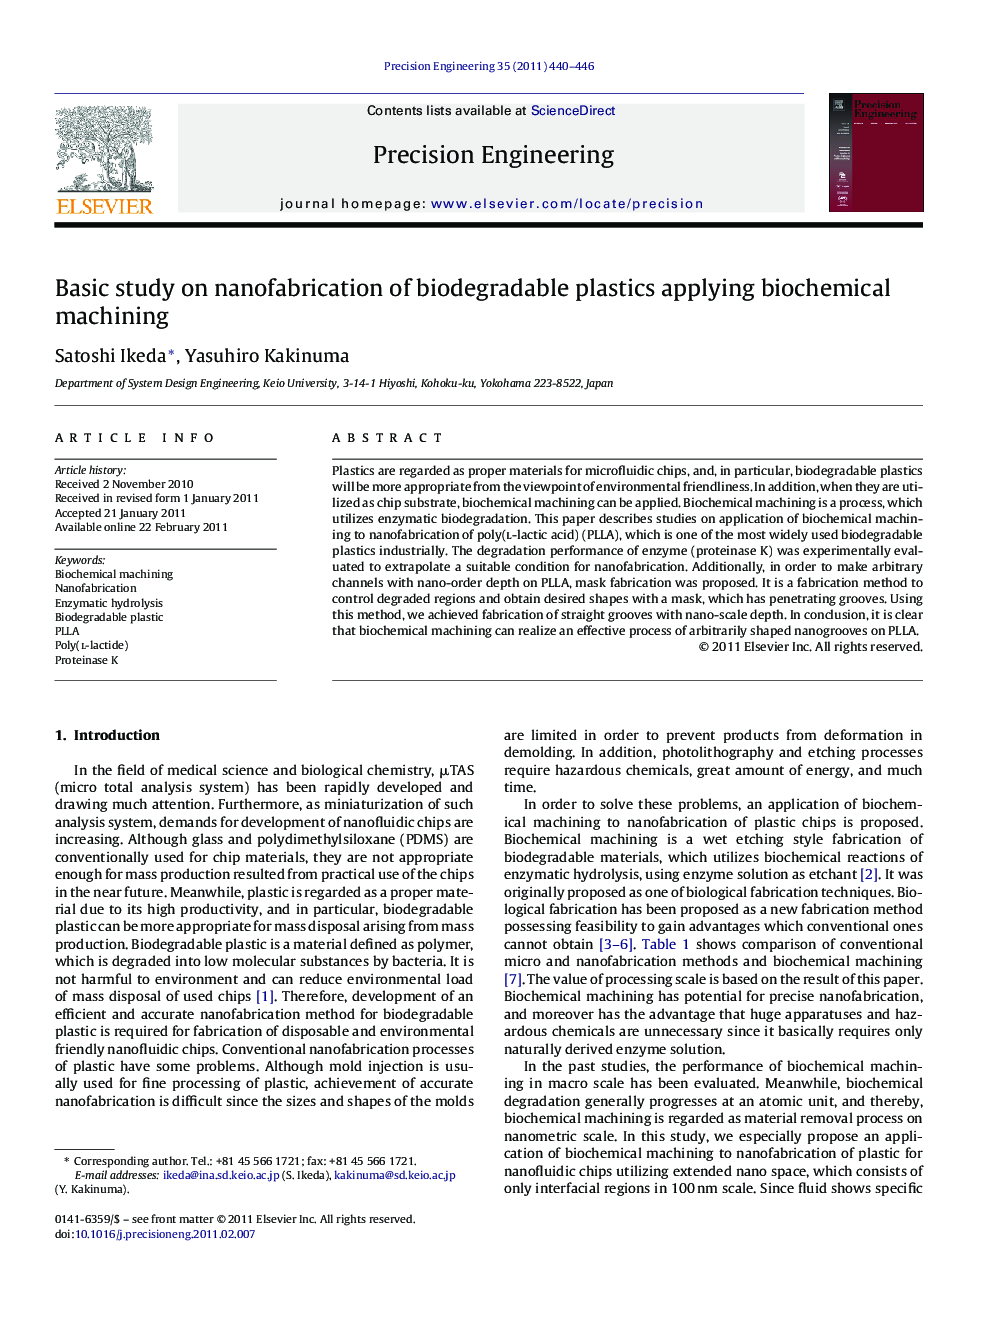 Basic study on nanofabrication of biodegradable plastics applying biochemical machining